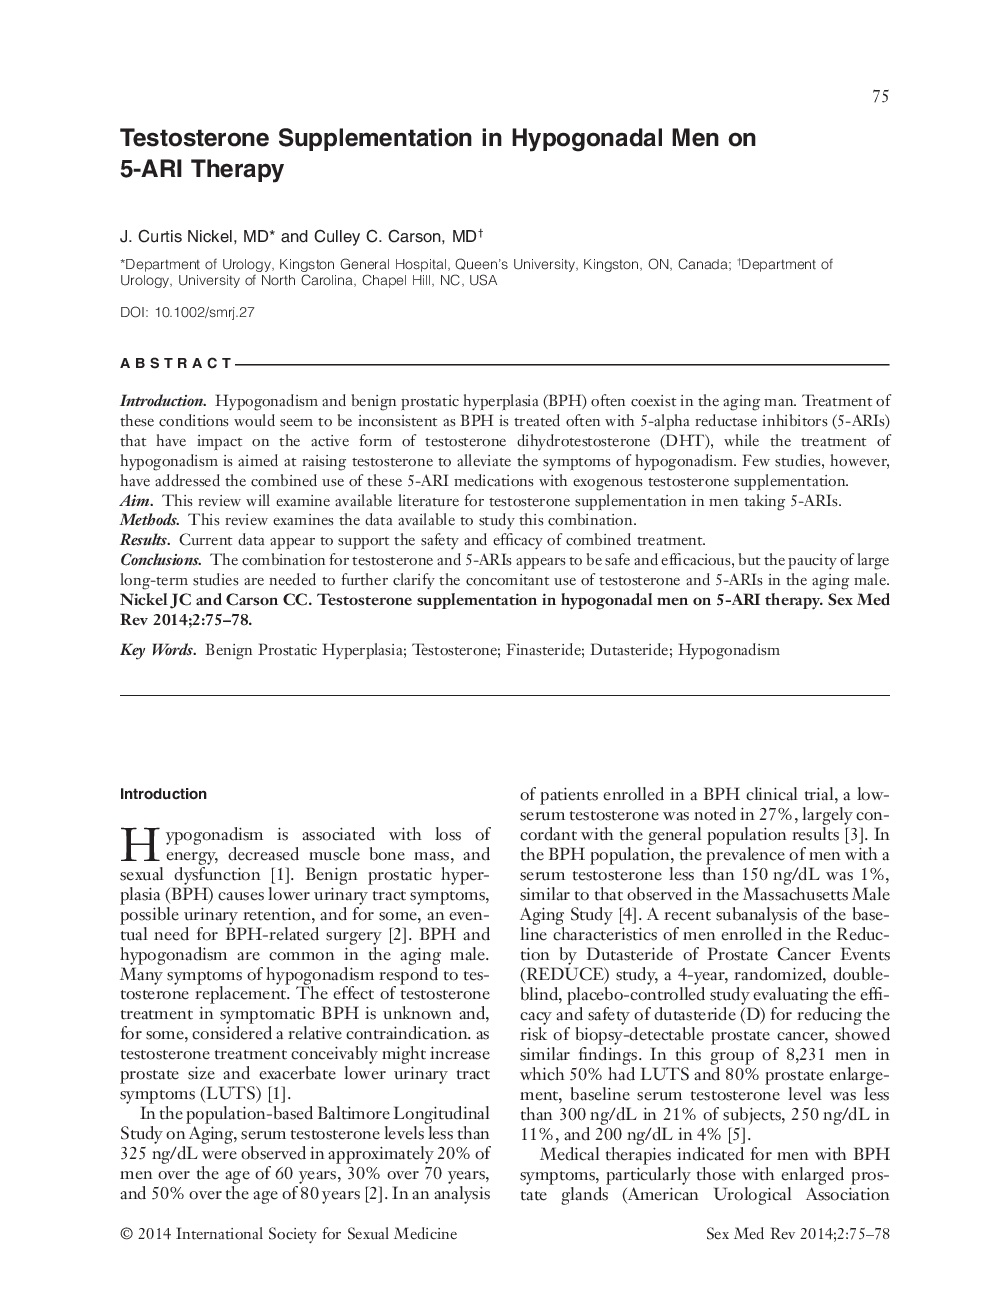 Testosterone Supplementation in Hypogonadal Men on 5âARI Therapy